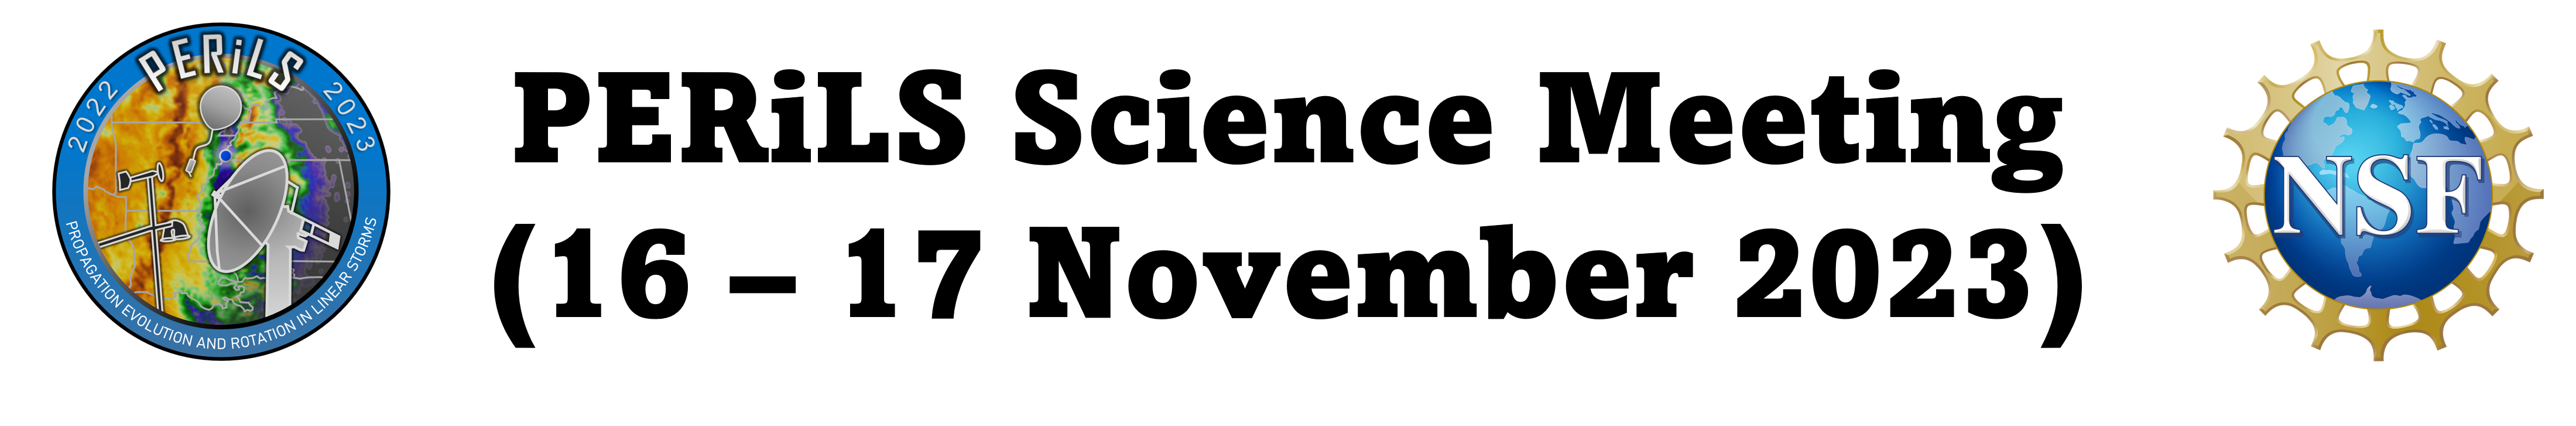 PERiLS Science Meeting (16 - 17 November 2023)